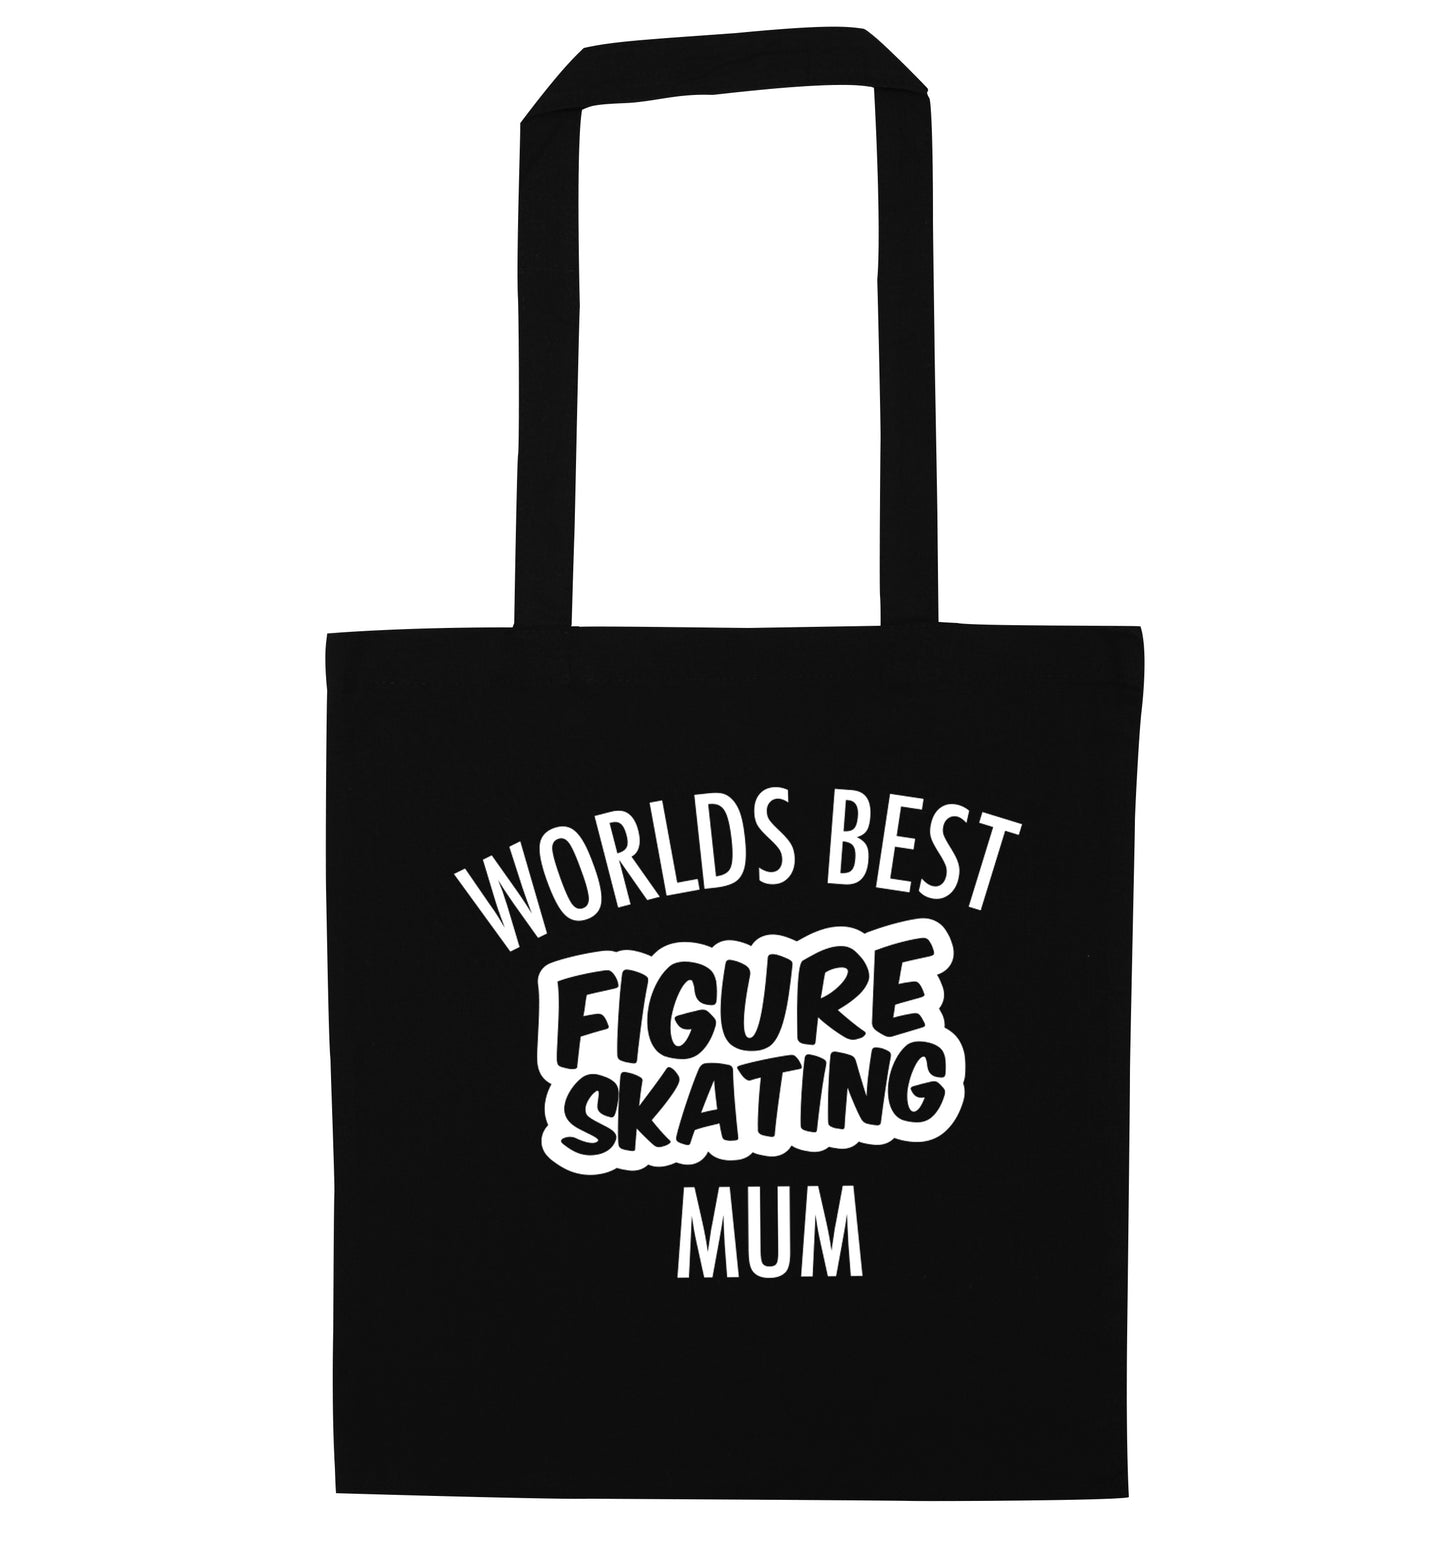 Worlds best figure skating mum black tote bag